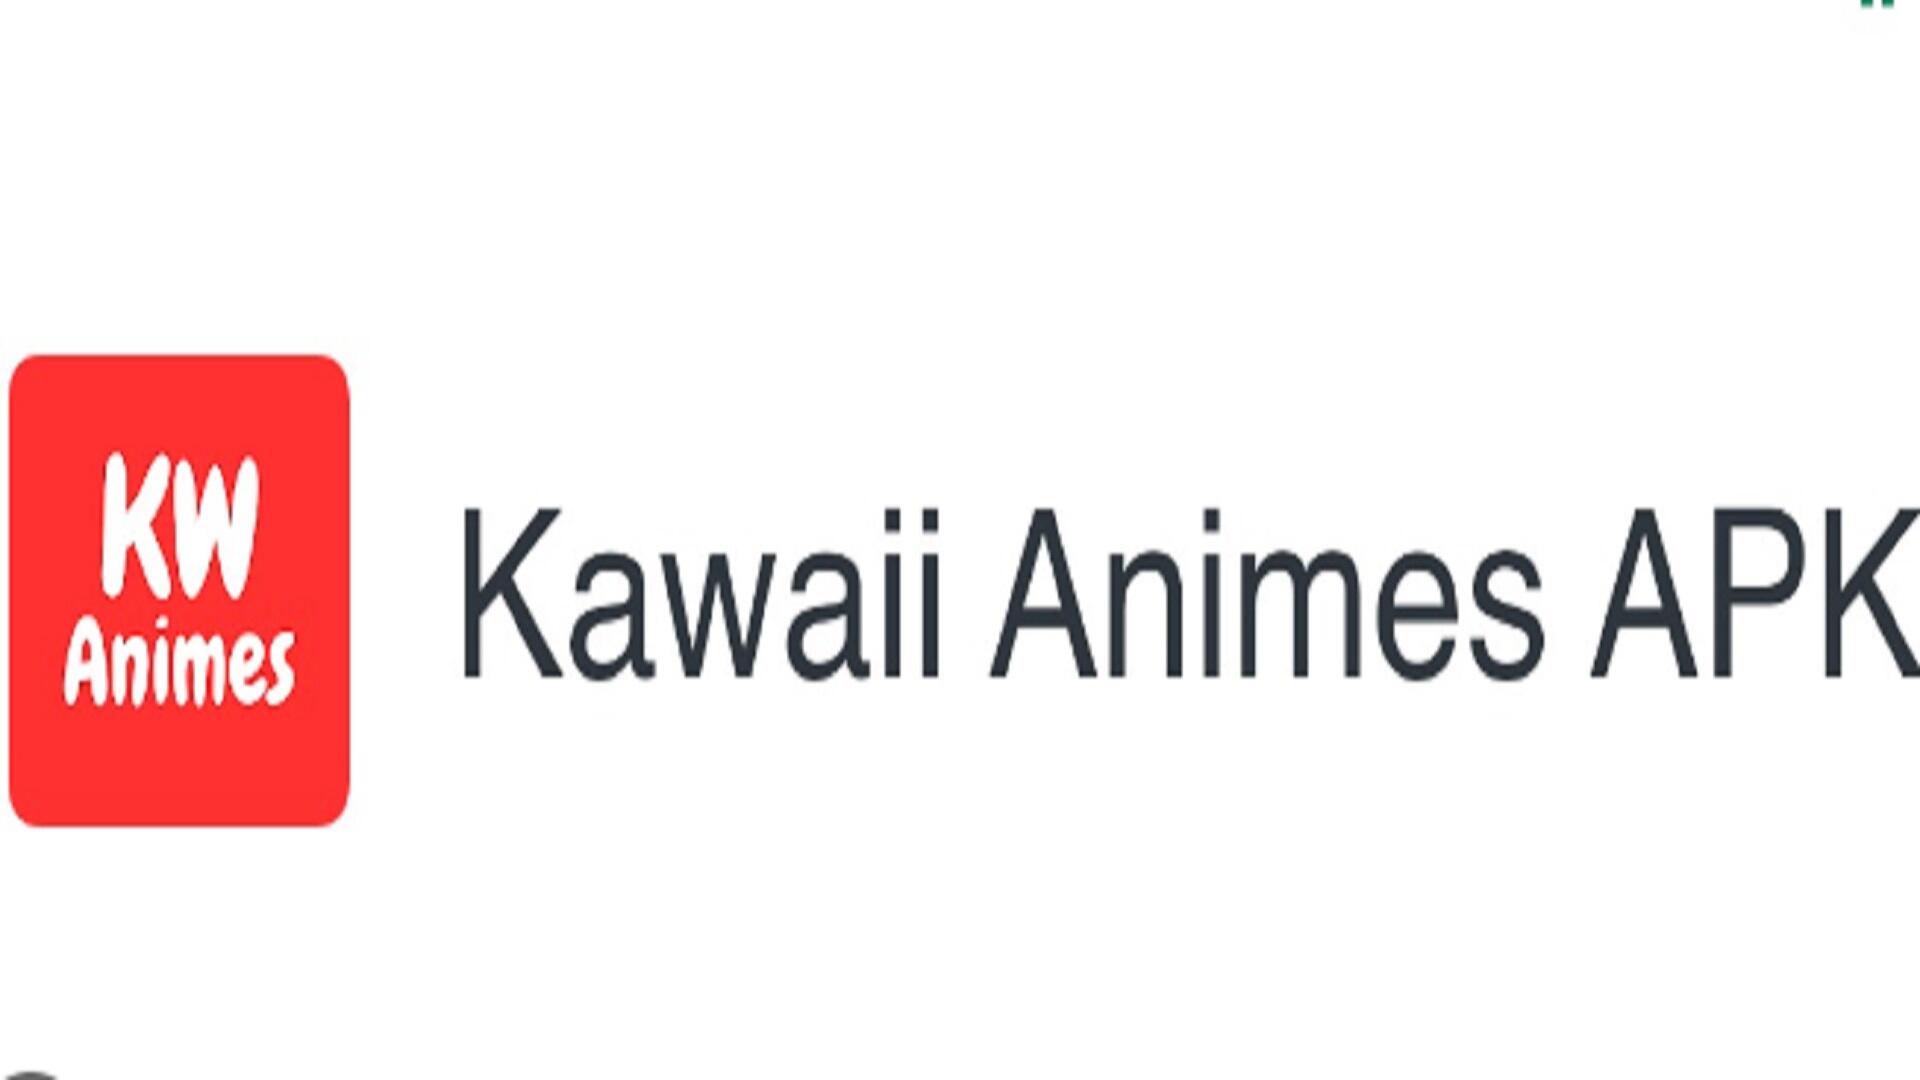 How to download Kawaii Animes APK/IOS latest version